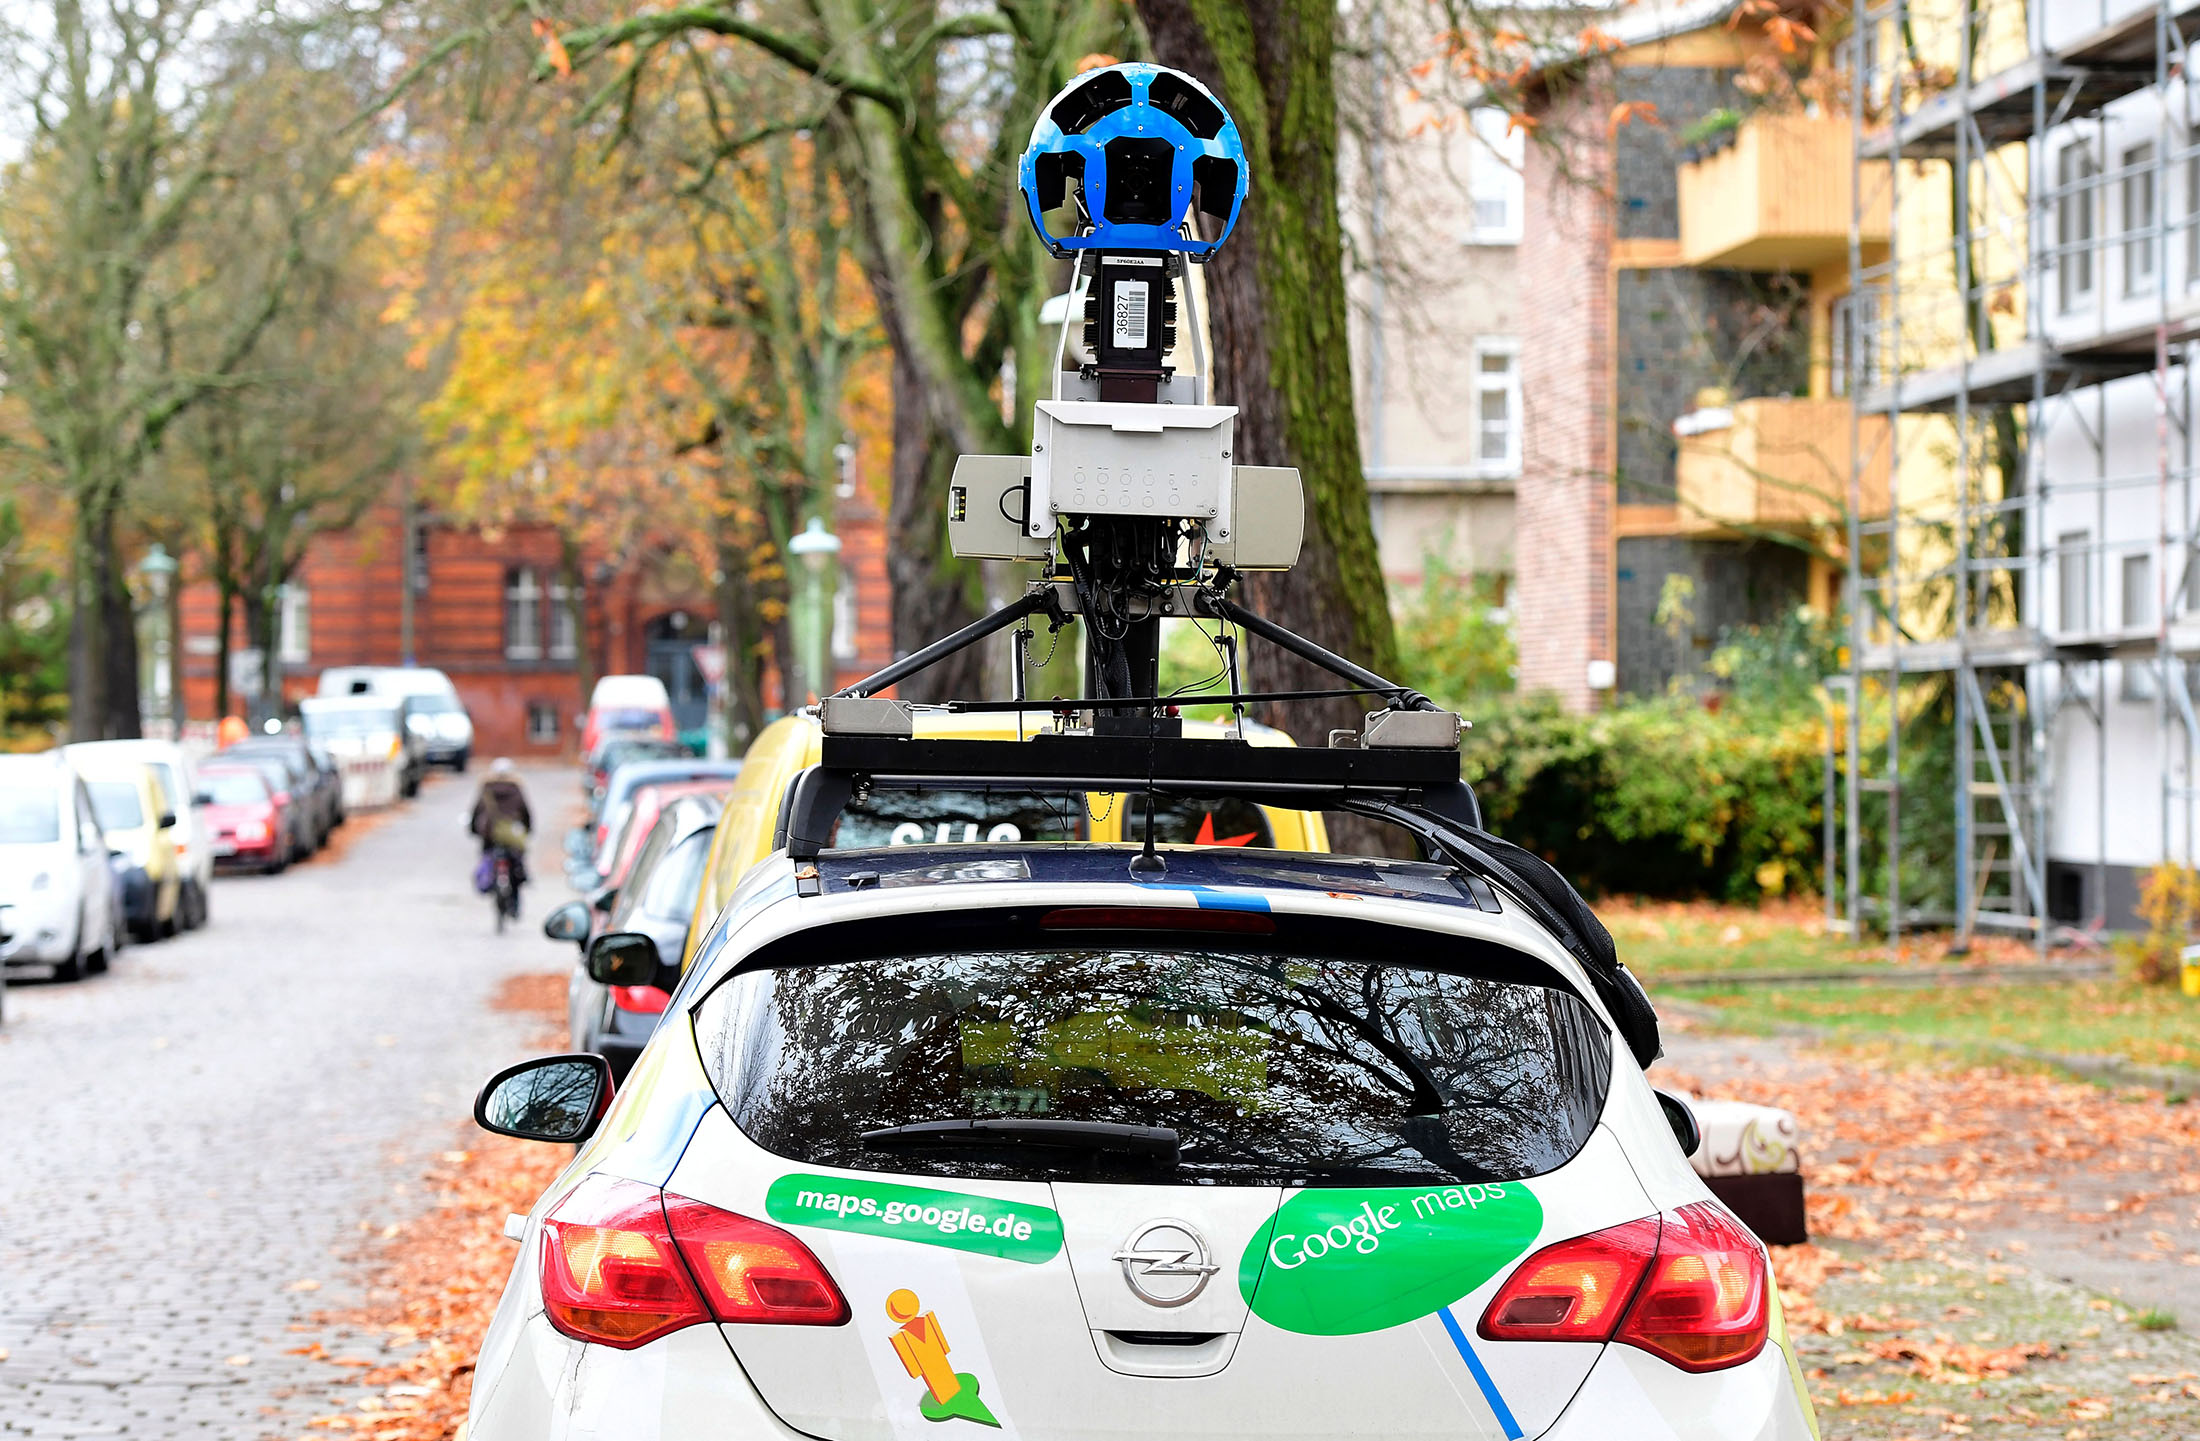 A Google street view car&nbsp;in Berlin on Nov.&nbsp;7, 2016.